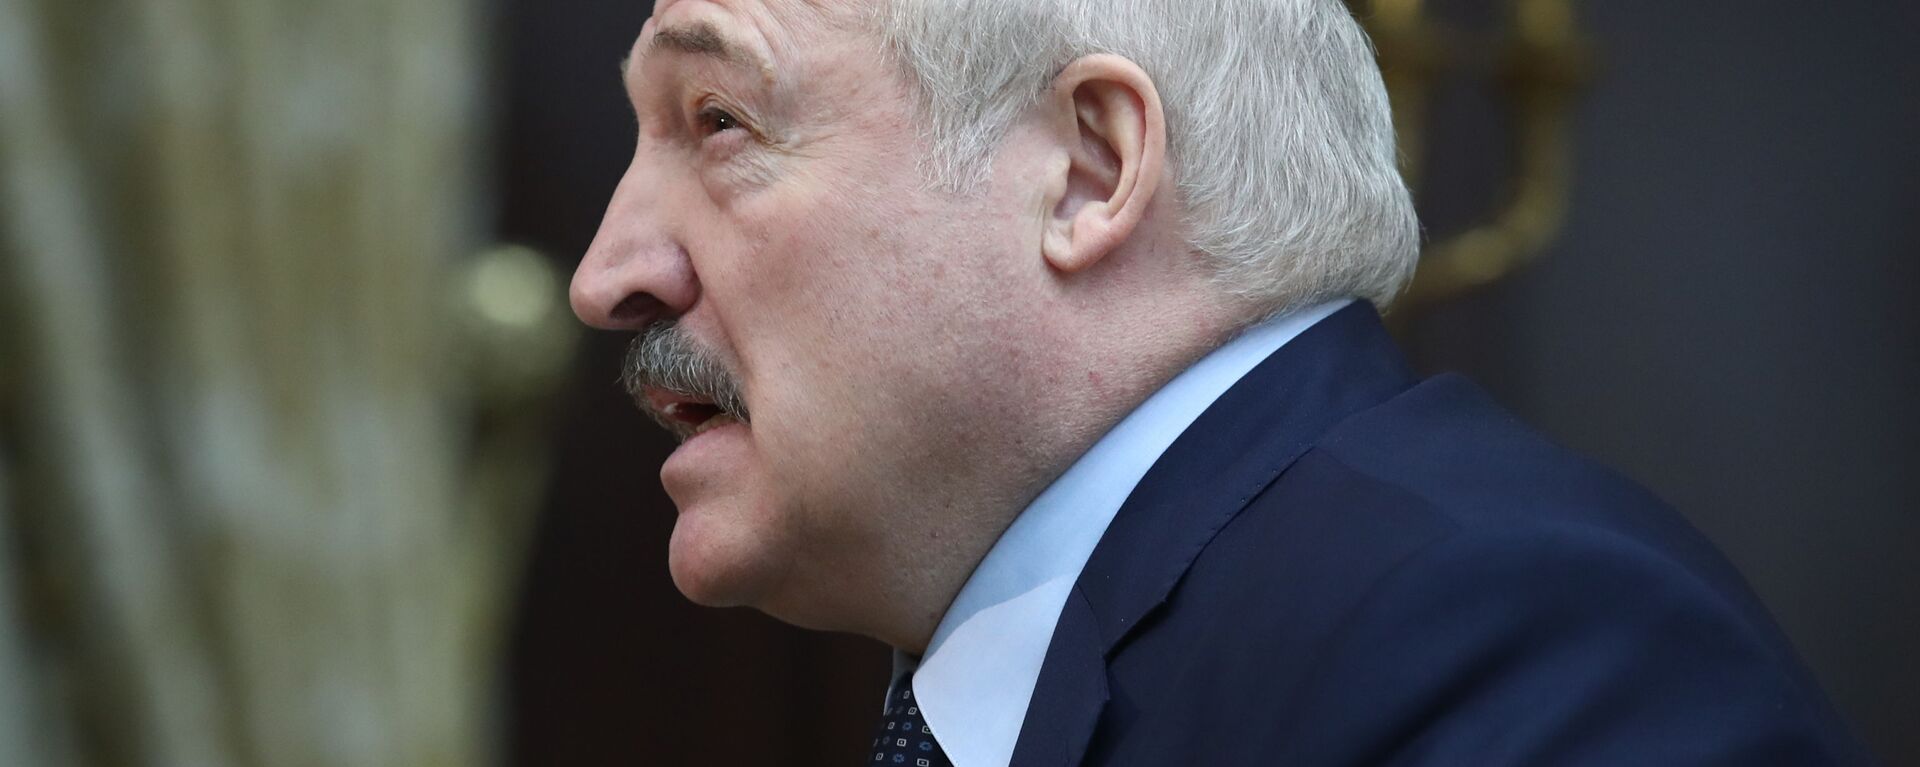 Baltarusijos prezidentas Aleksandras Lukašenka - Sputnik Lietuva, 1920, 02.07.2021